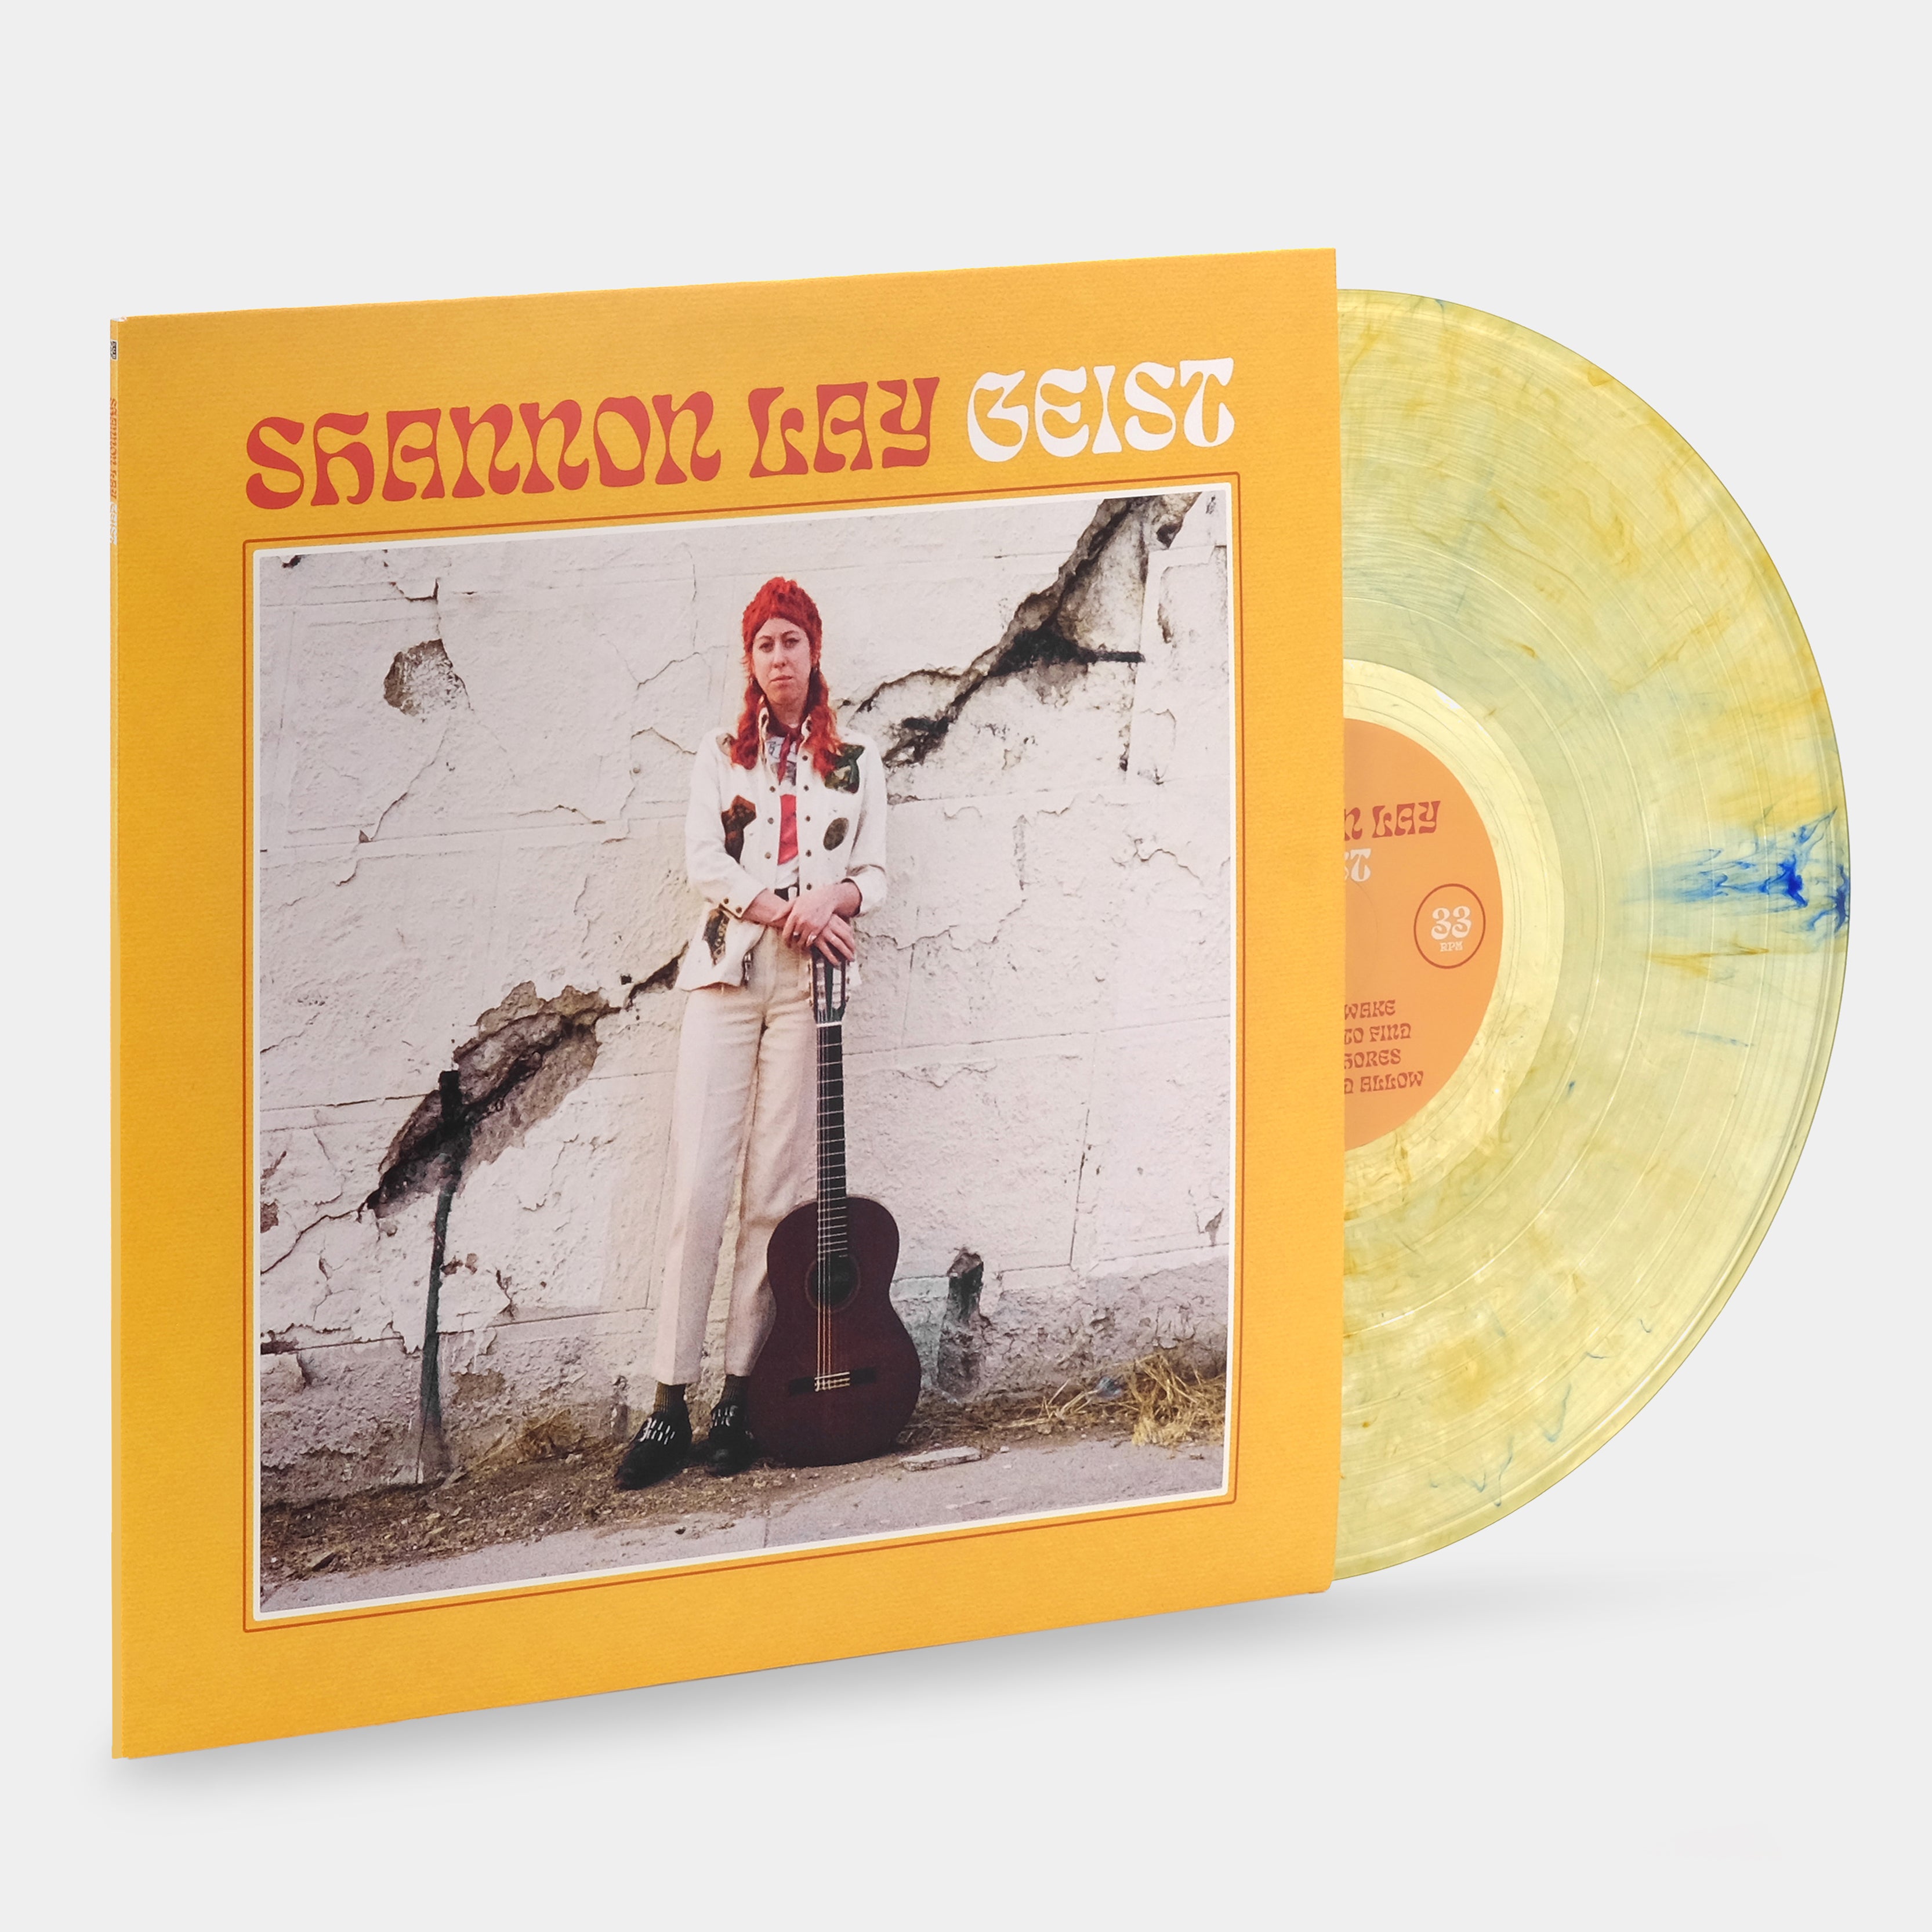 Shannon Lay - Geist LP Yellow Translucent Marble Vinyl Record